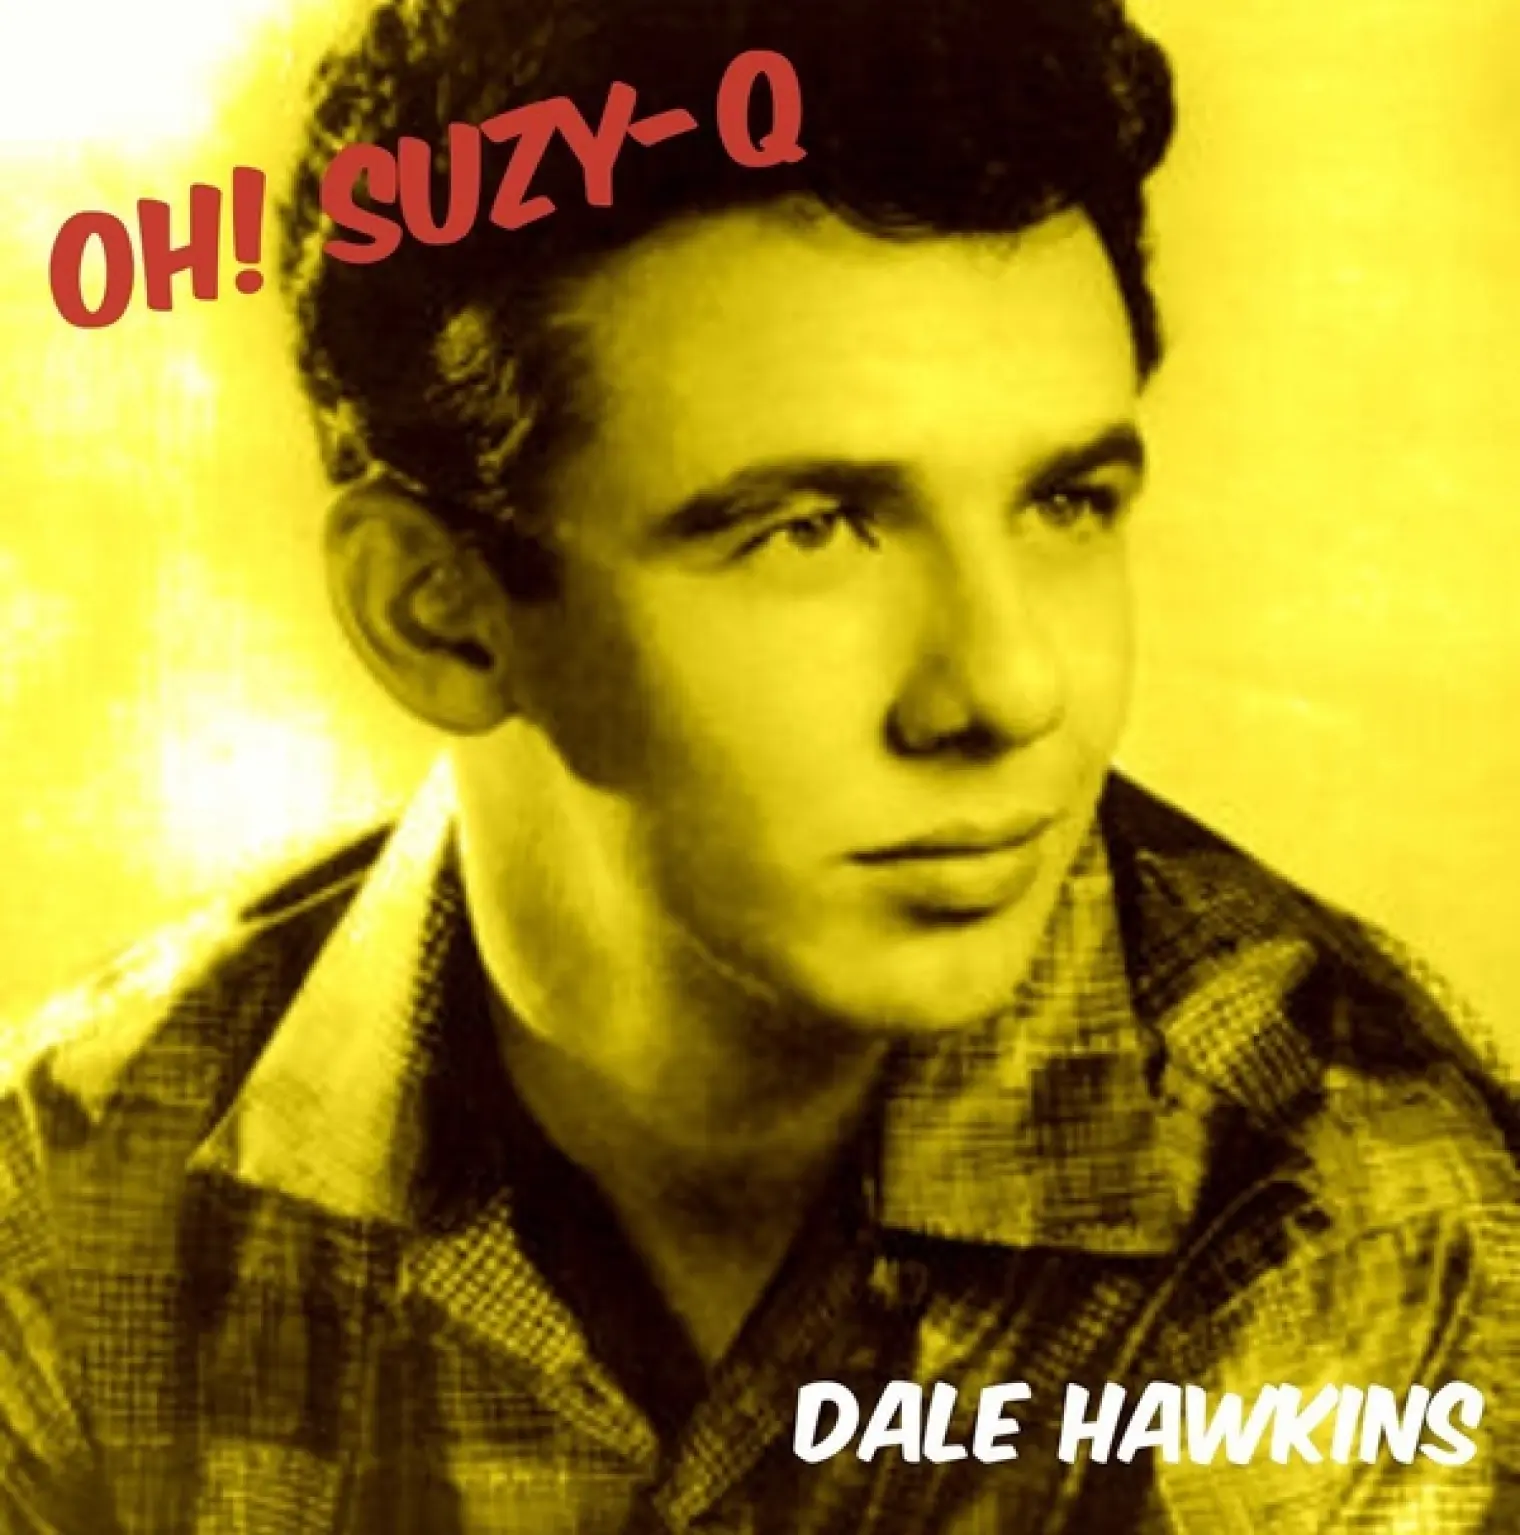 Oh! Suzy-Q -  Dale Hawkins 